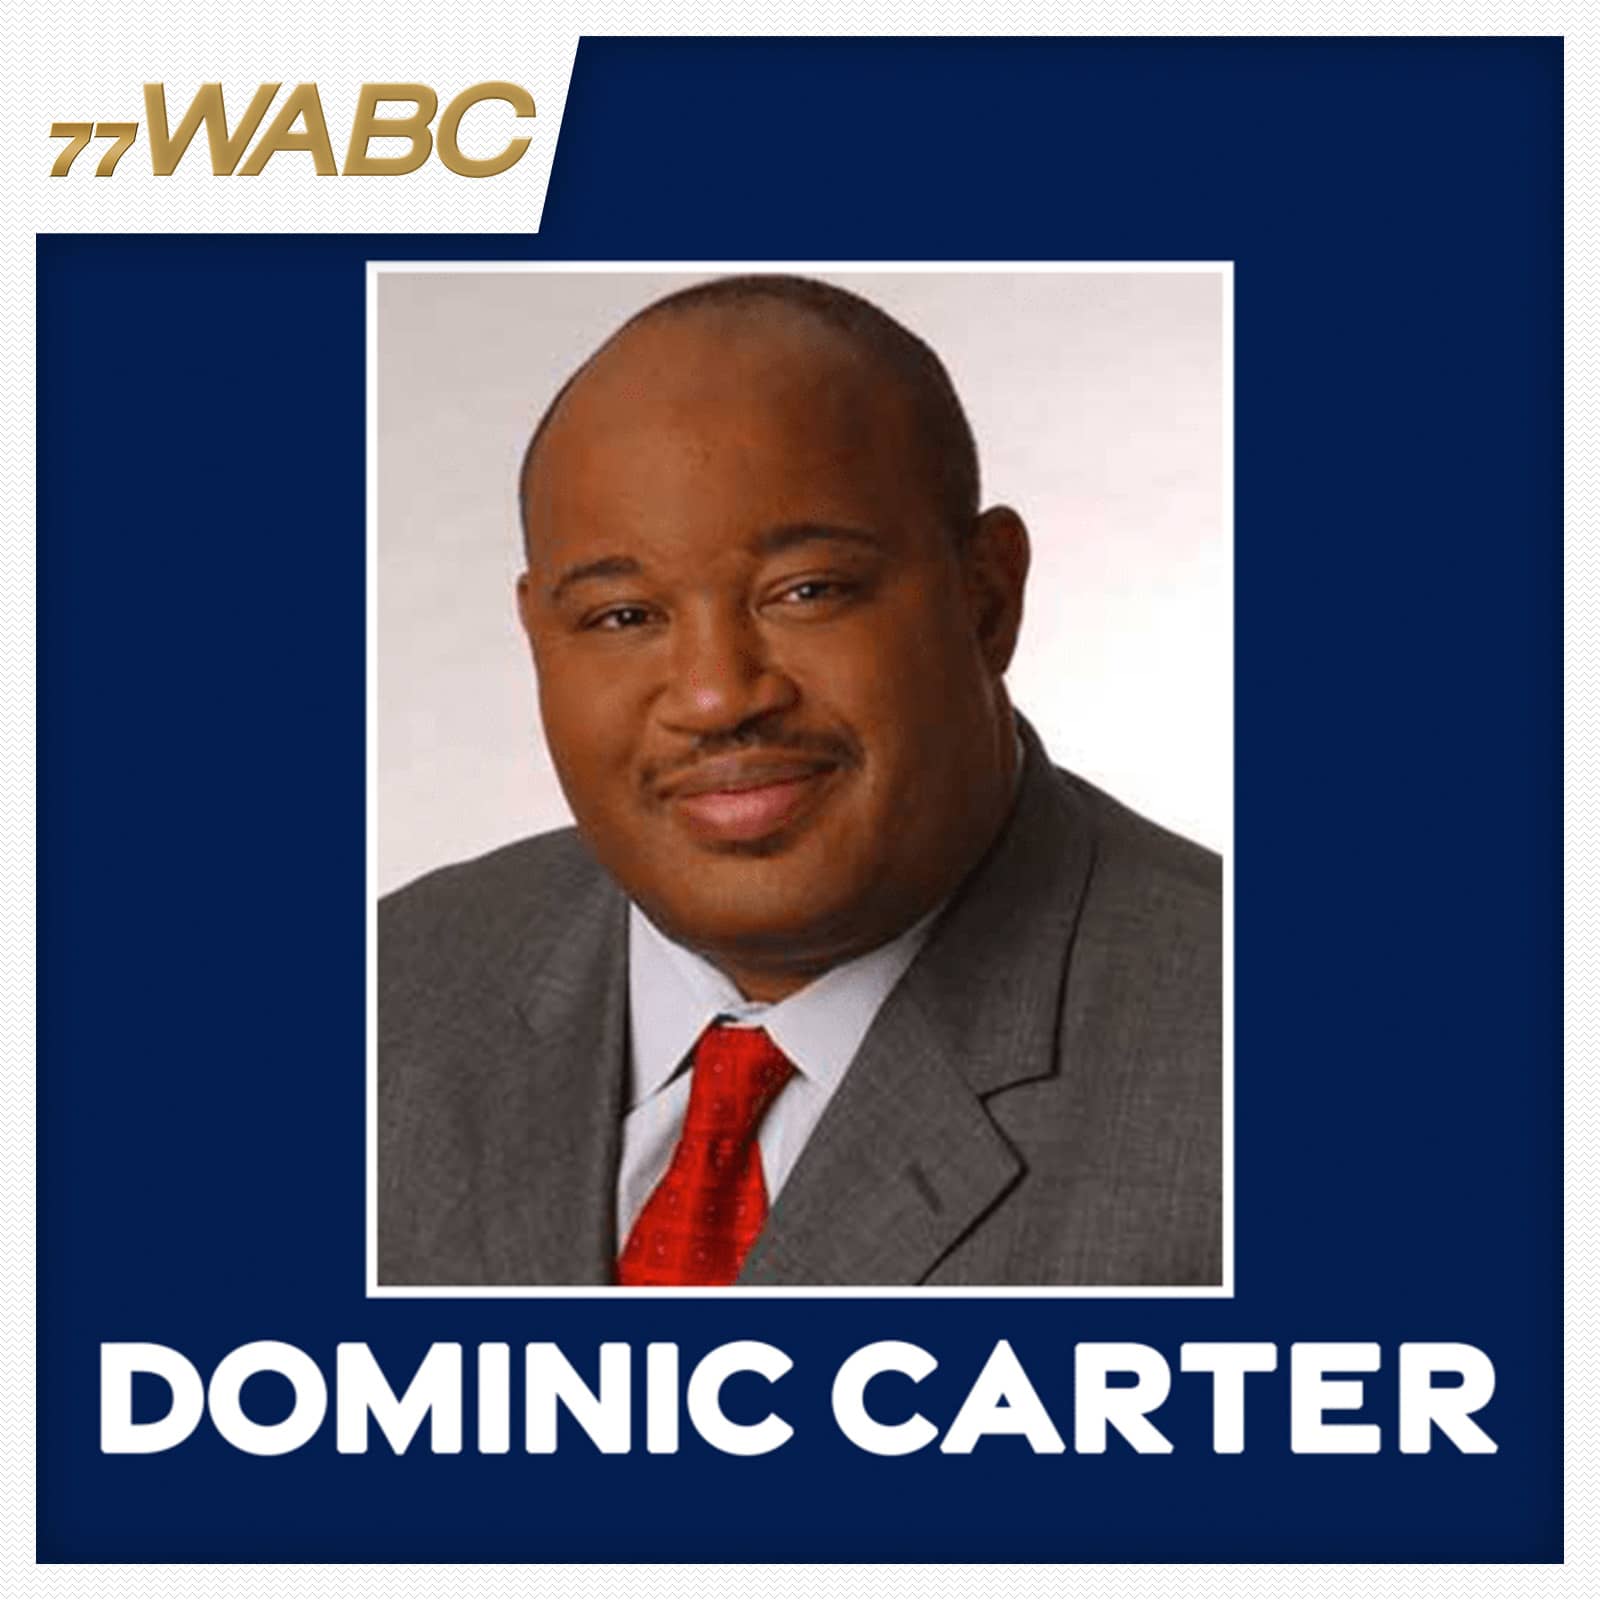 dominic-carter-podcast-new-logo-372